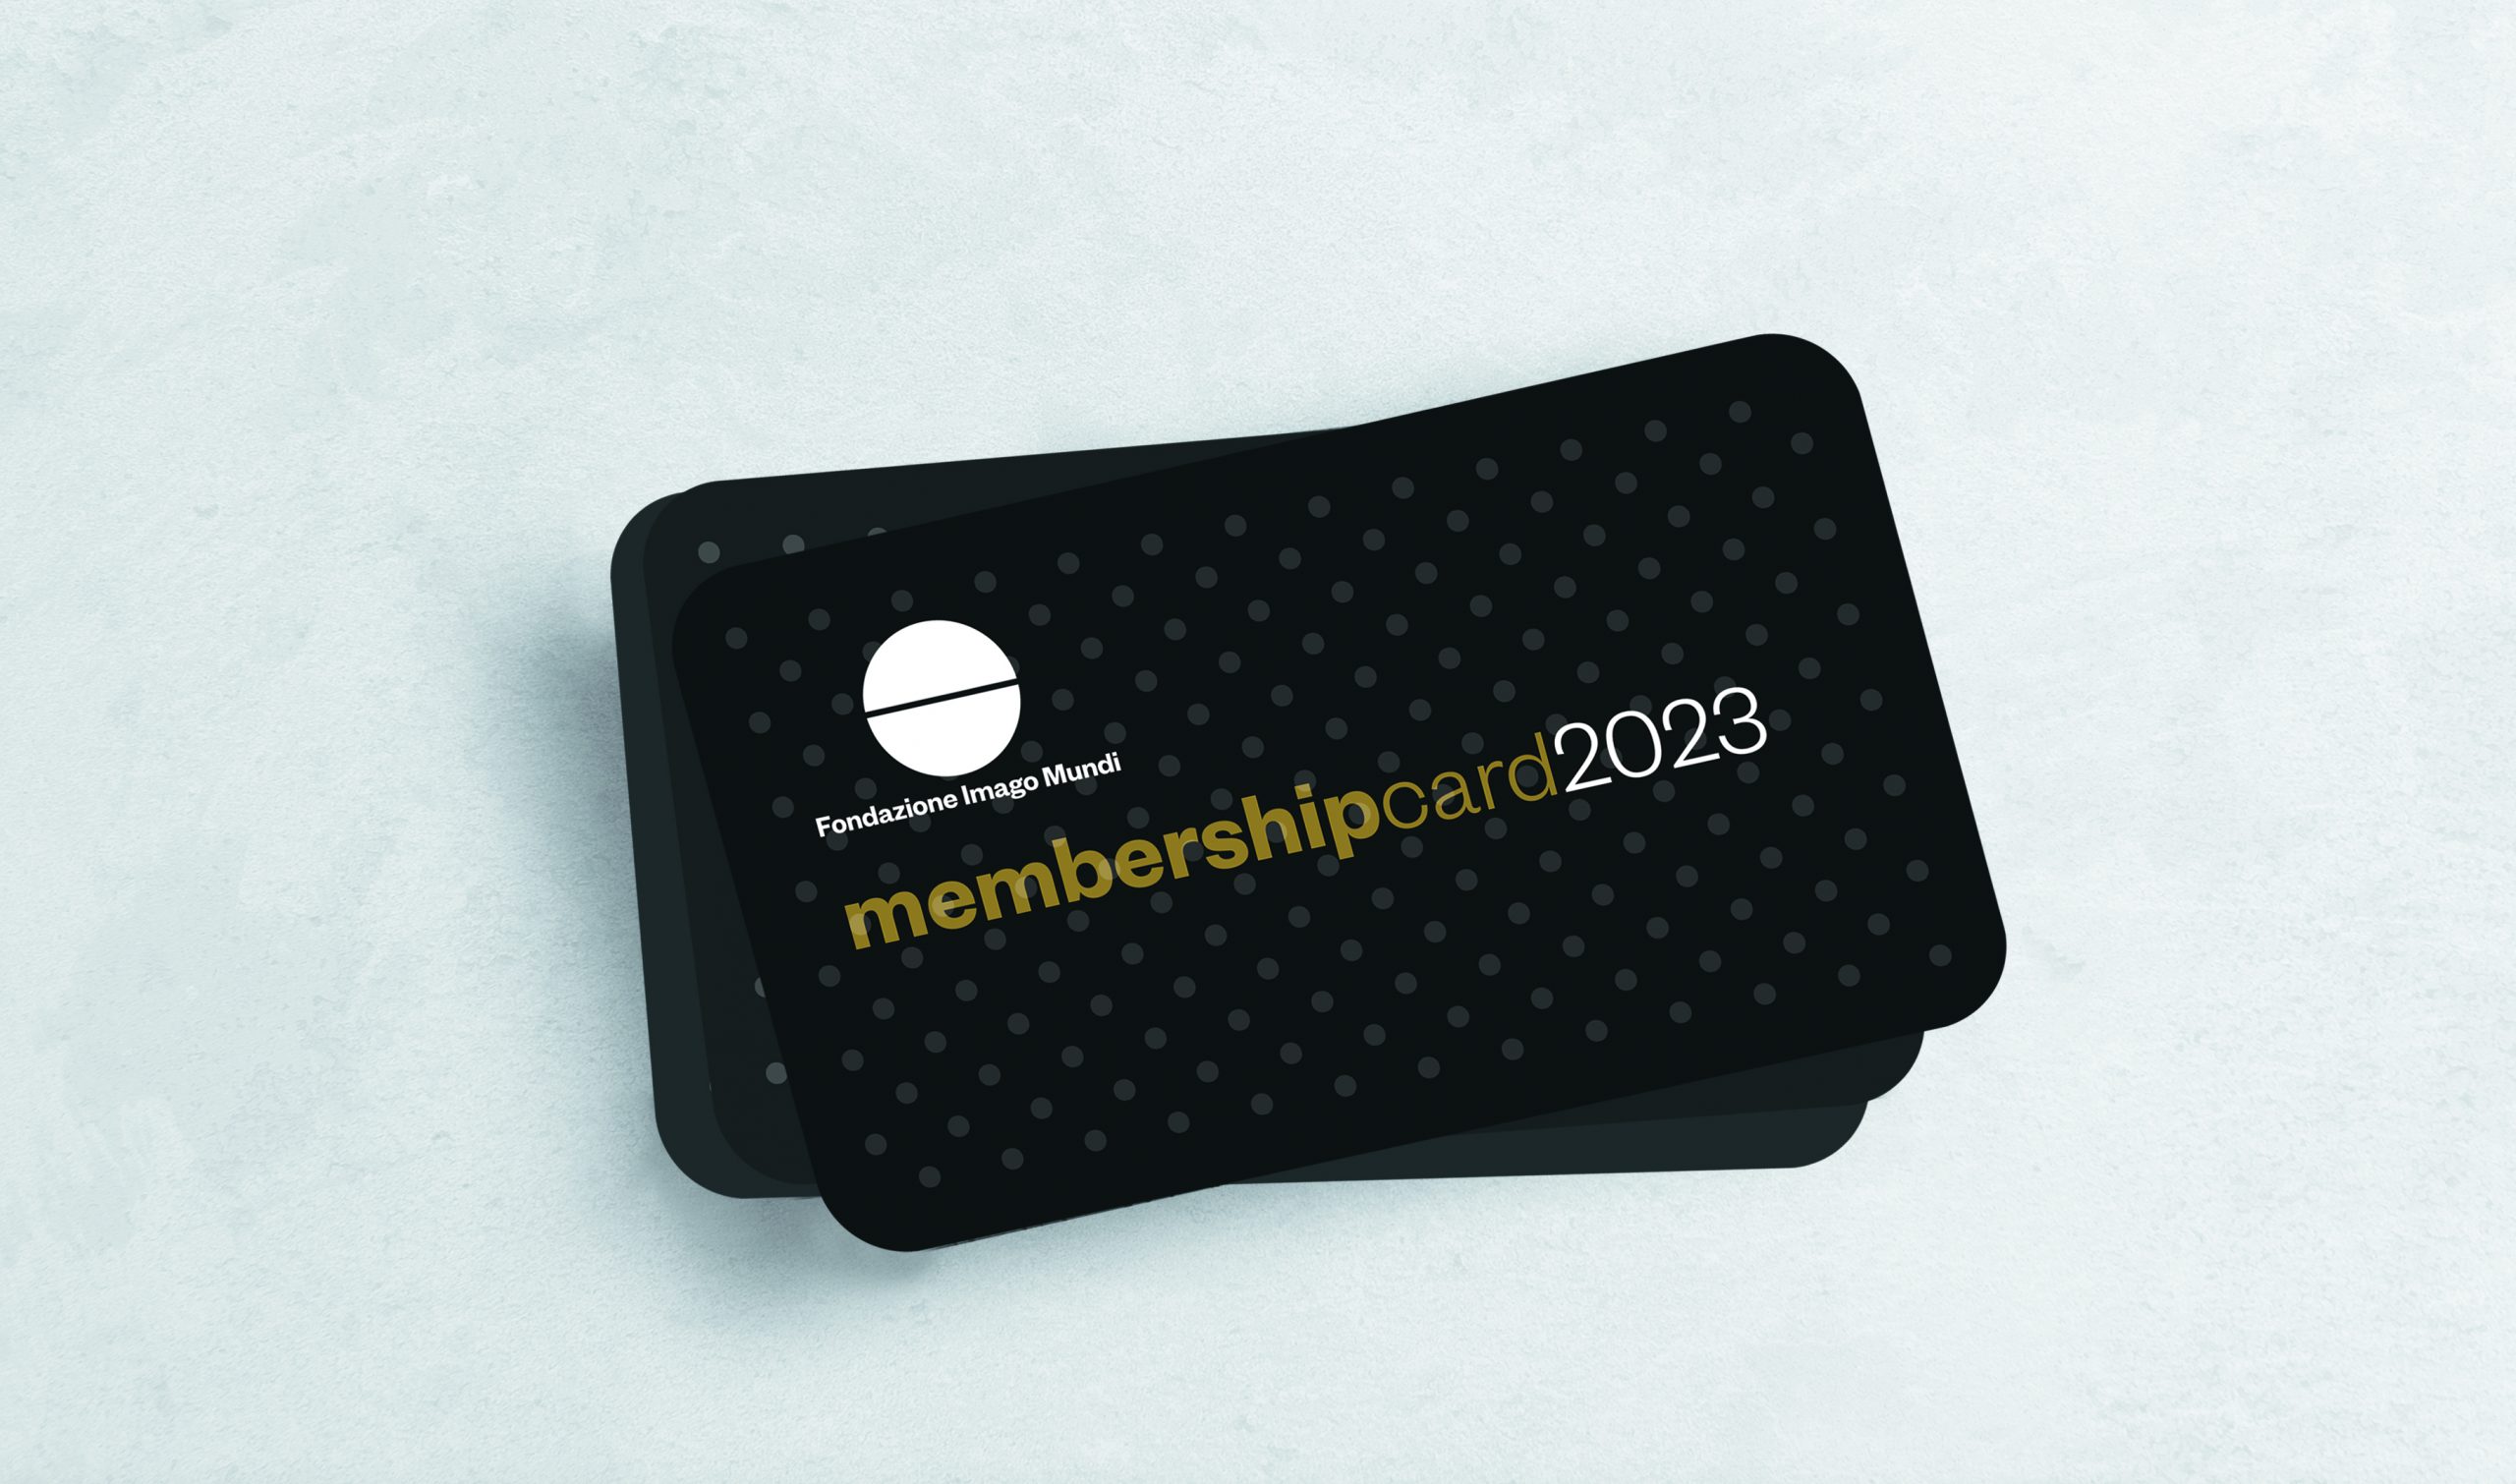 Membership Card Imago Mundi